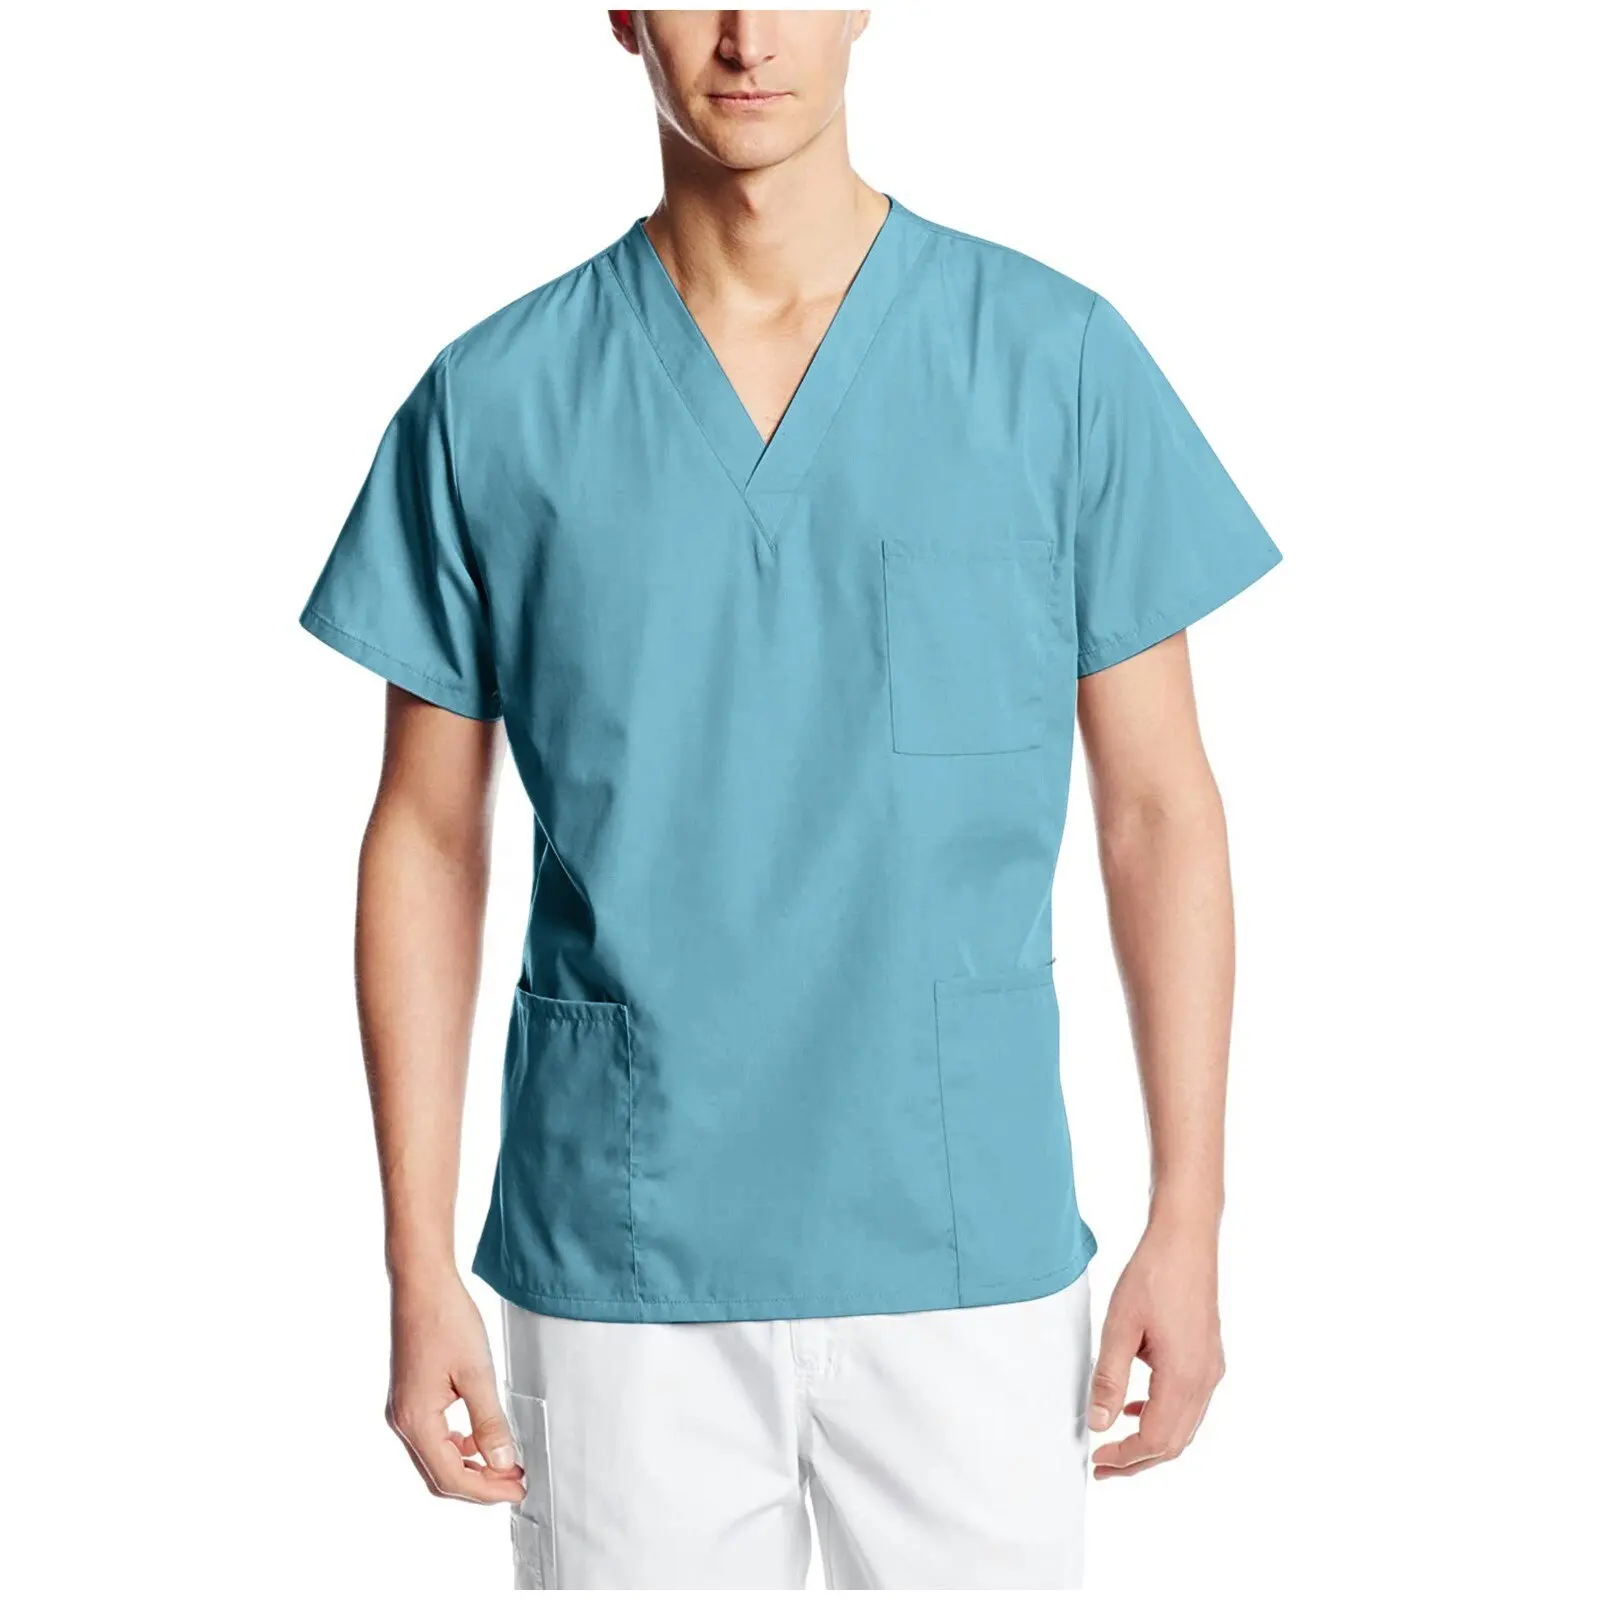 New Breathable Nurse Accessories Beauty Salon Uniform Fashion Slim Fit Top Scrub Clothes Summer Lab Coat Spa Hospital Uniform